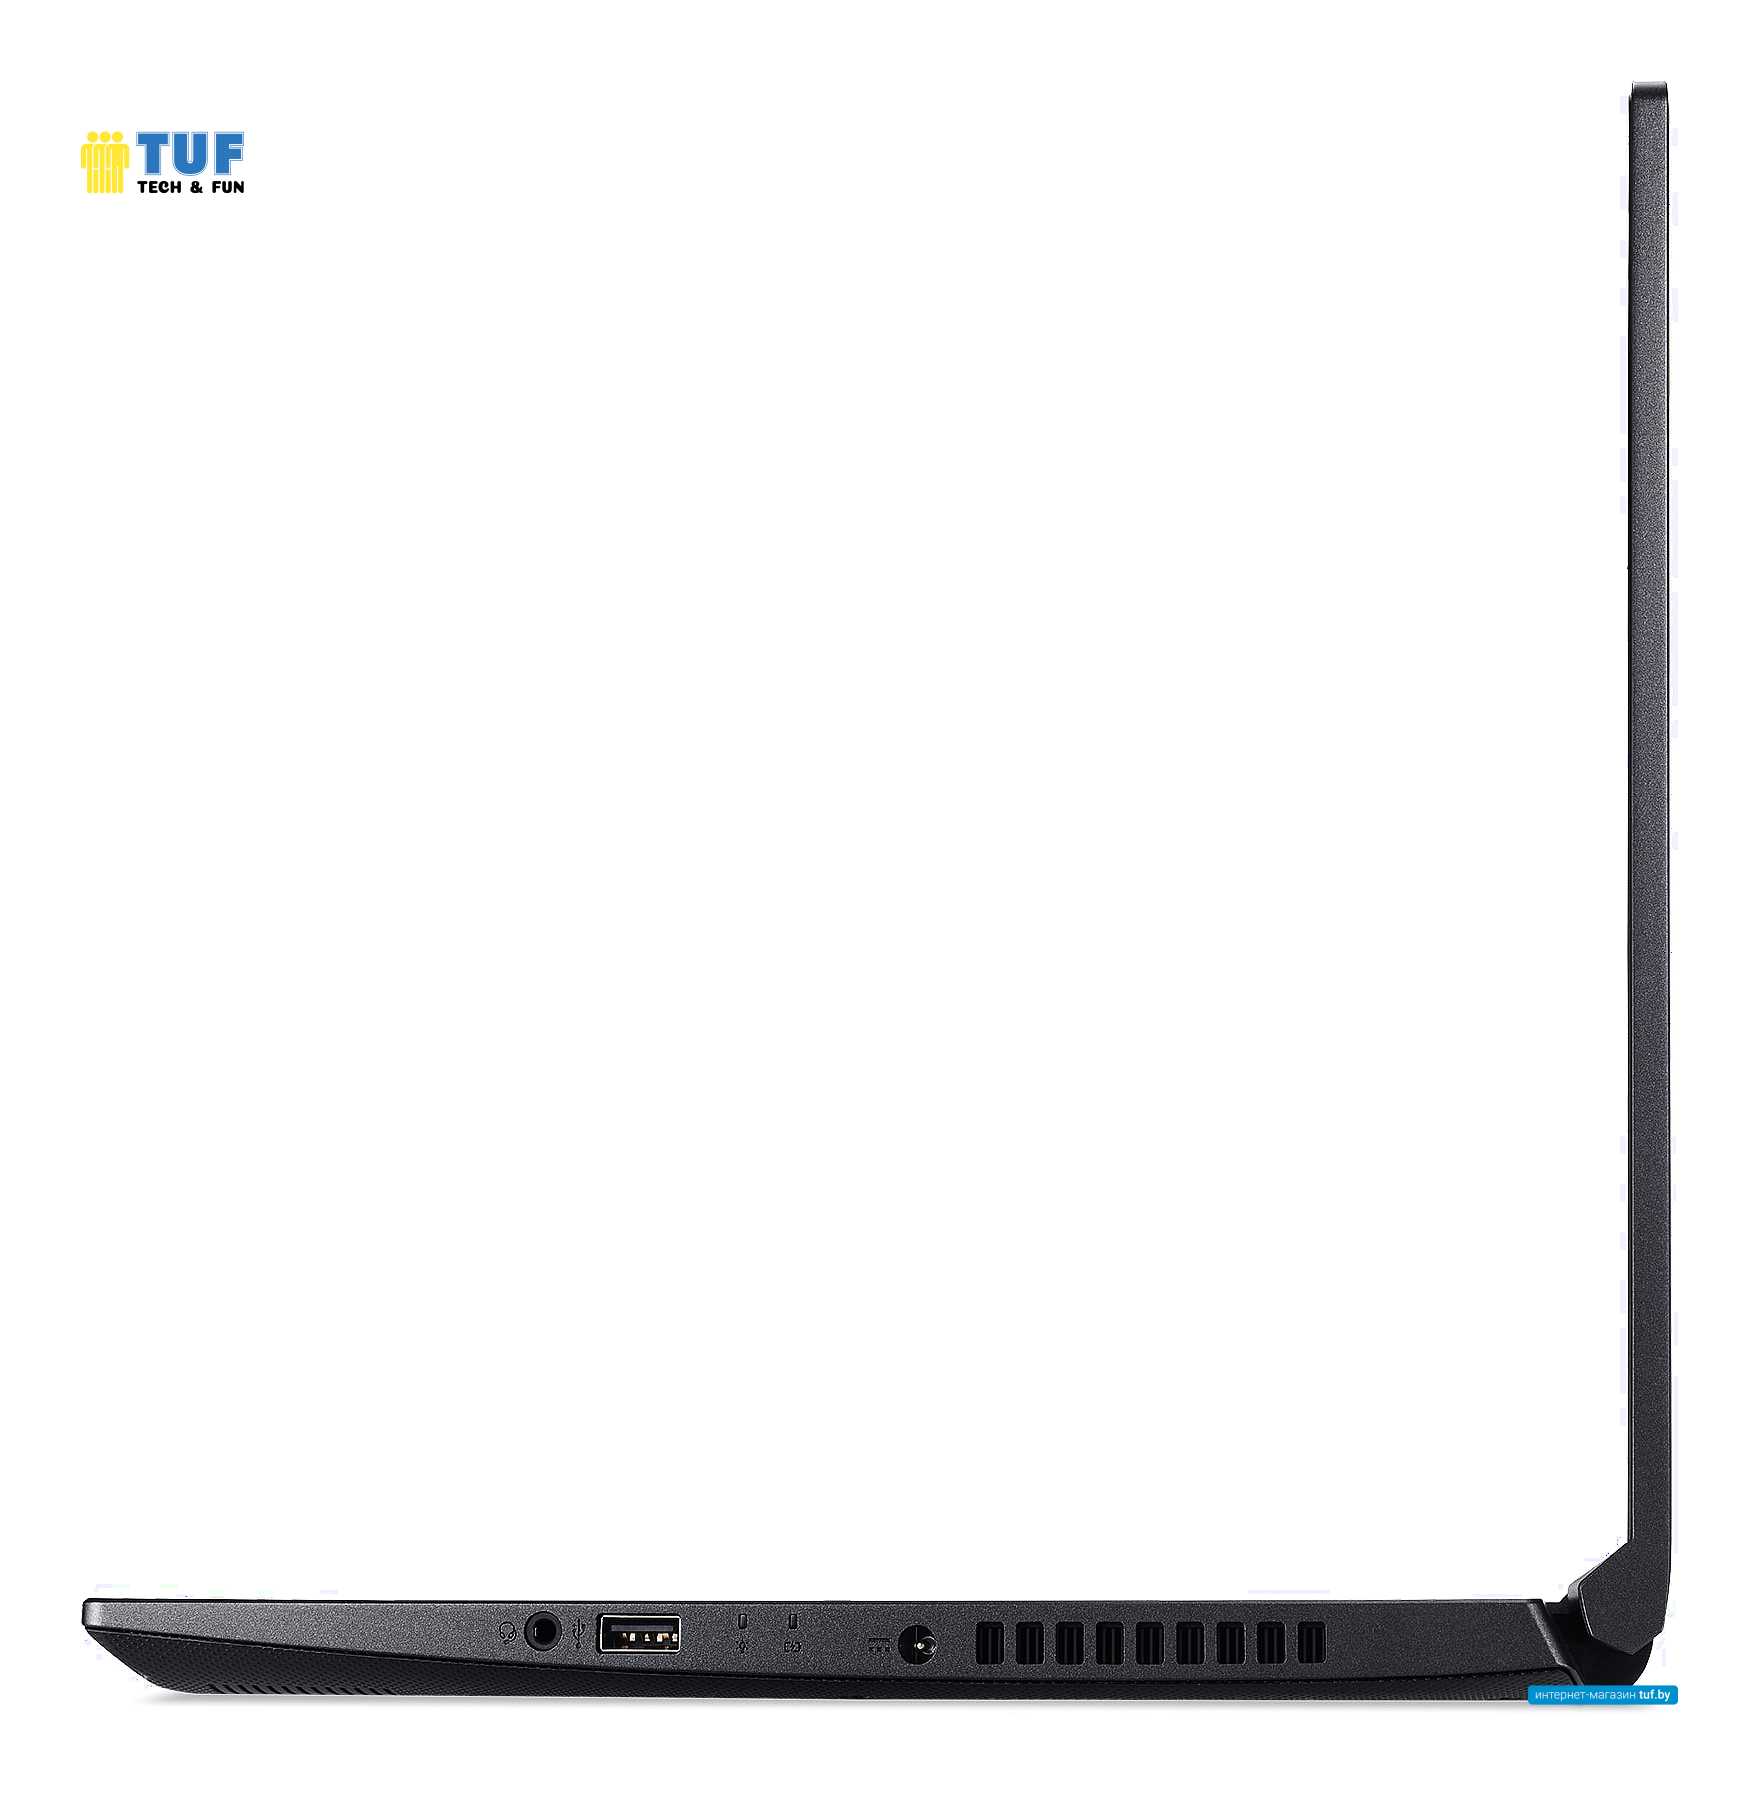 Ноутбук Acer Aspire 7 A715-75G-53NP NH.Q88EU.003